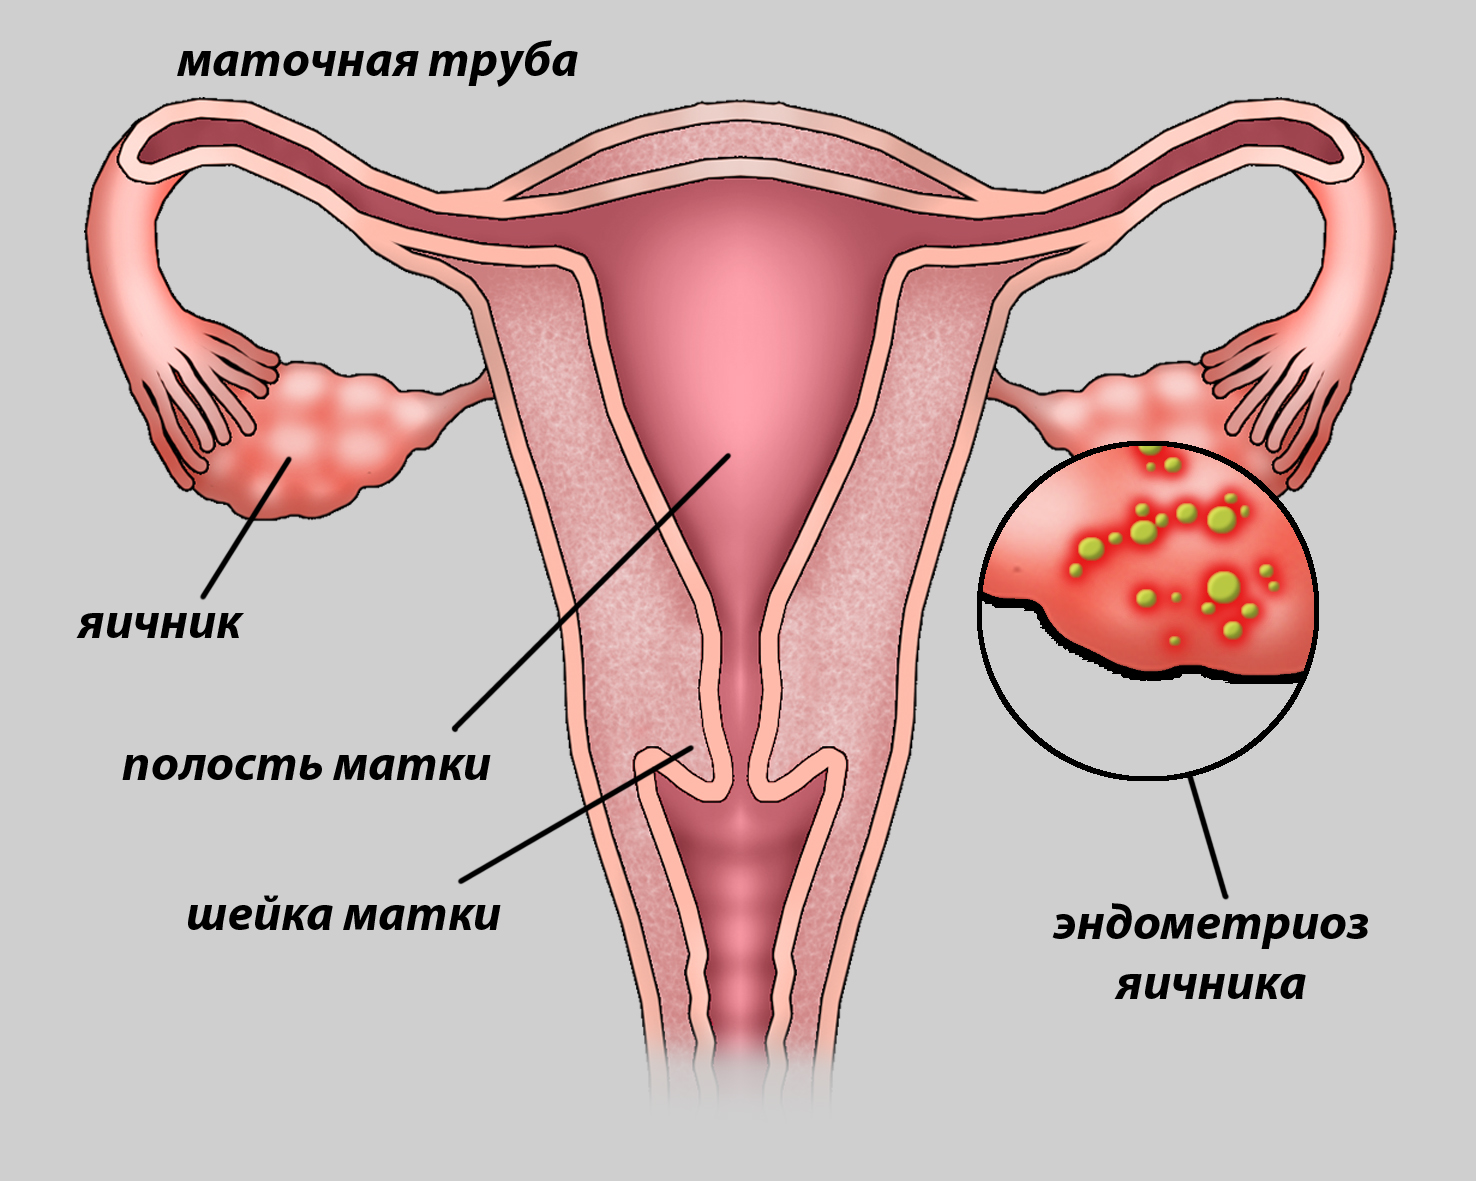 Эндометриоз яичника